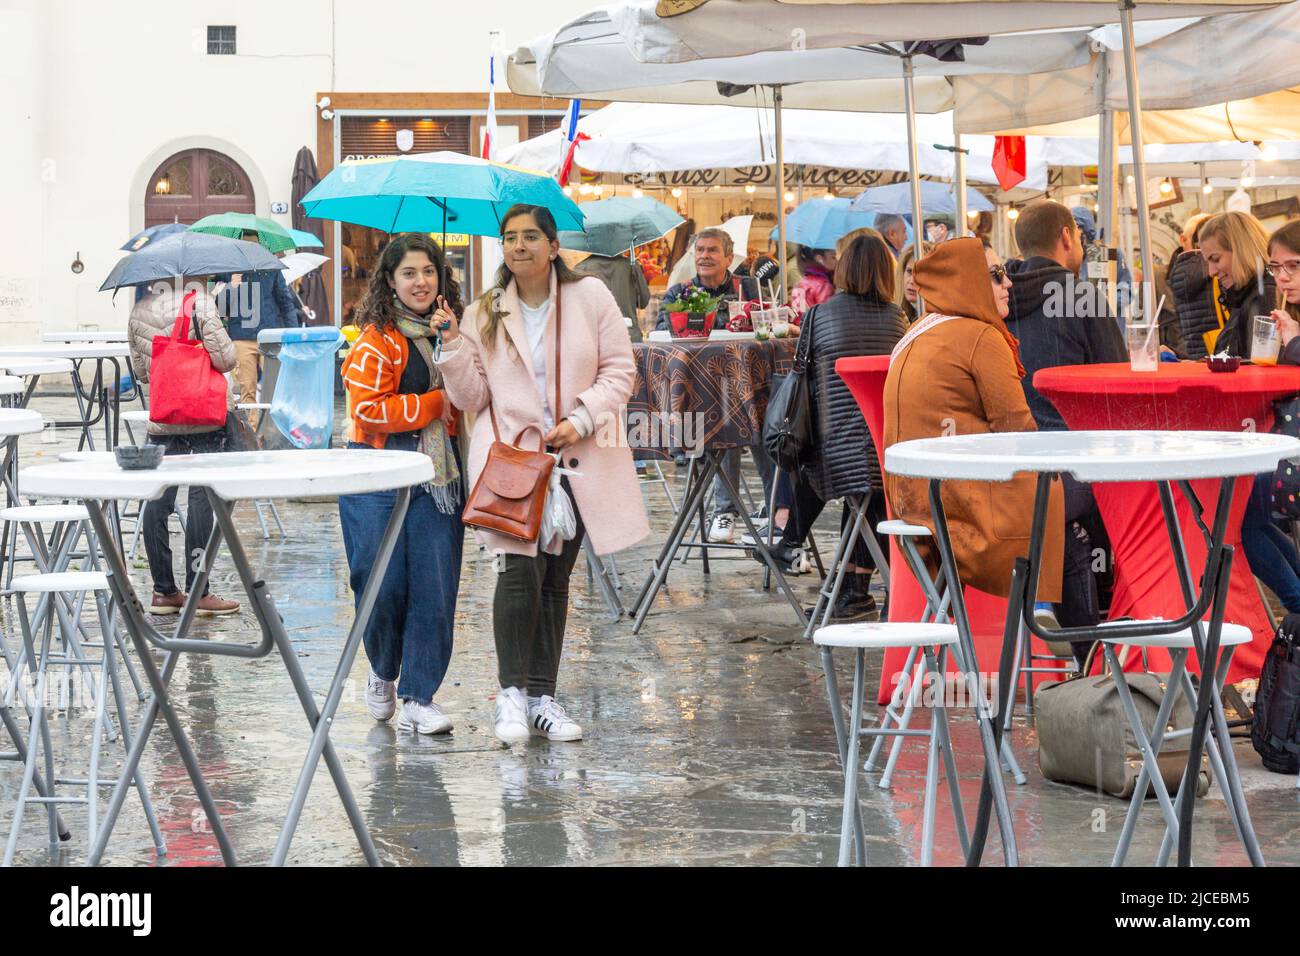 Young women walking  in rain with umbrella, Piazza di Santa Croce, Florence (Firenze), Tuscany Region, Italy Stock Photo